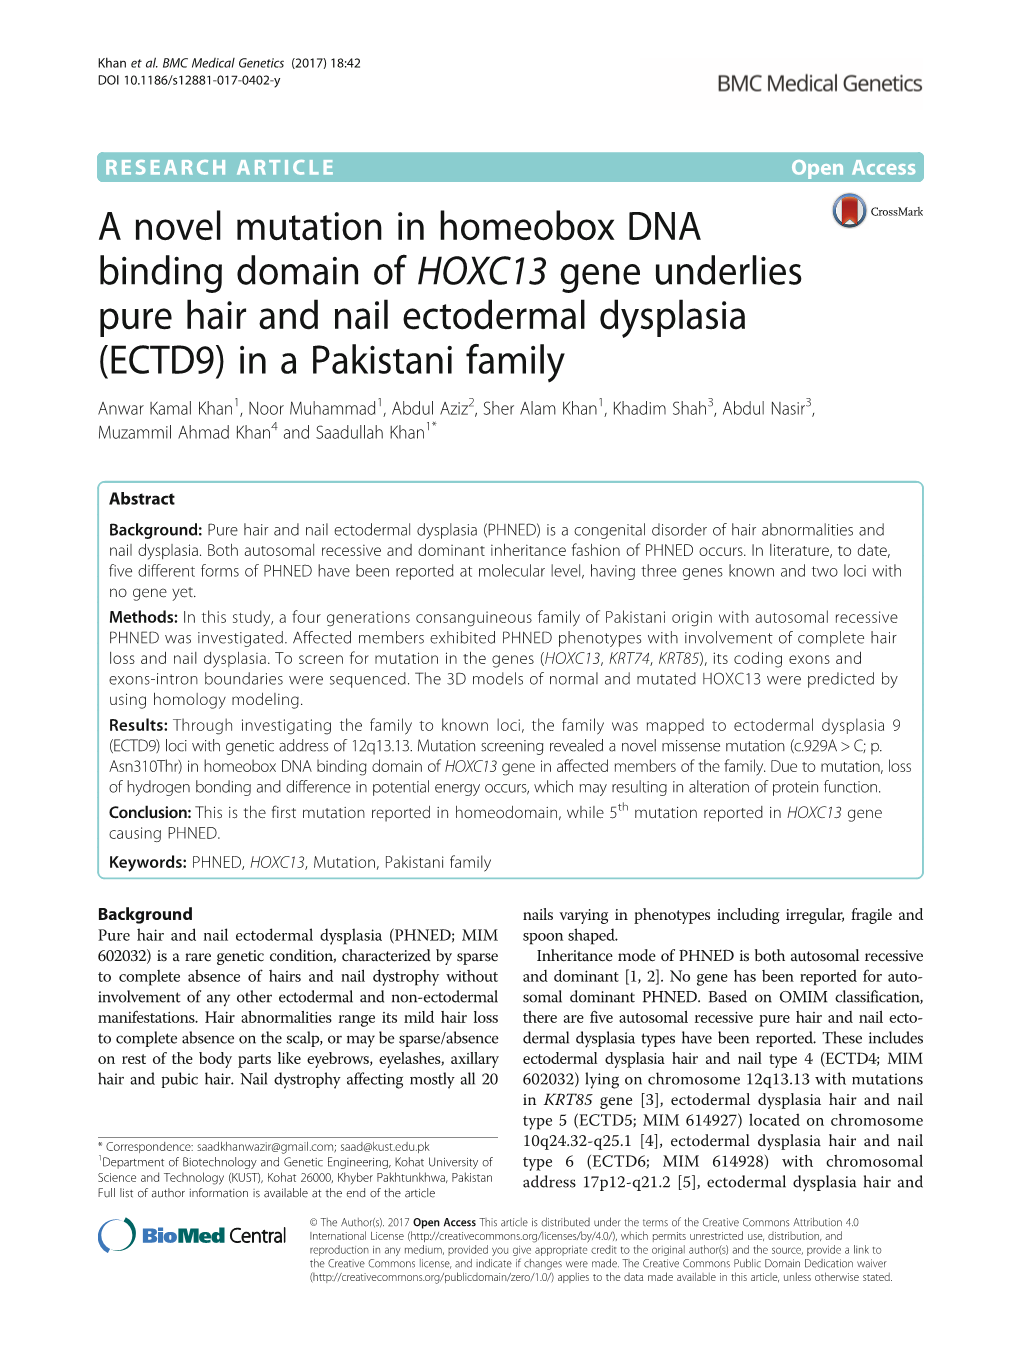 A Novel Mutation in Homeobox DNA Binding Domain of HOXC13 Gene